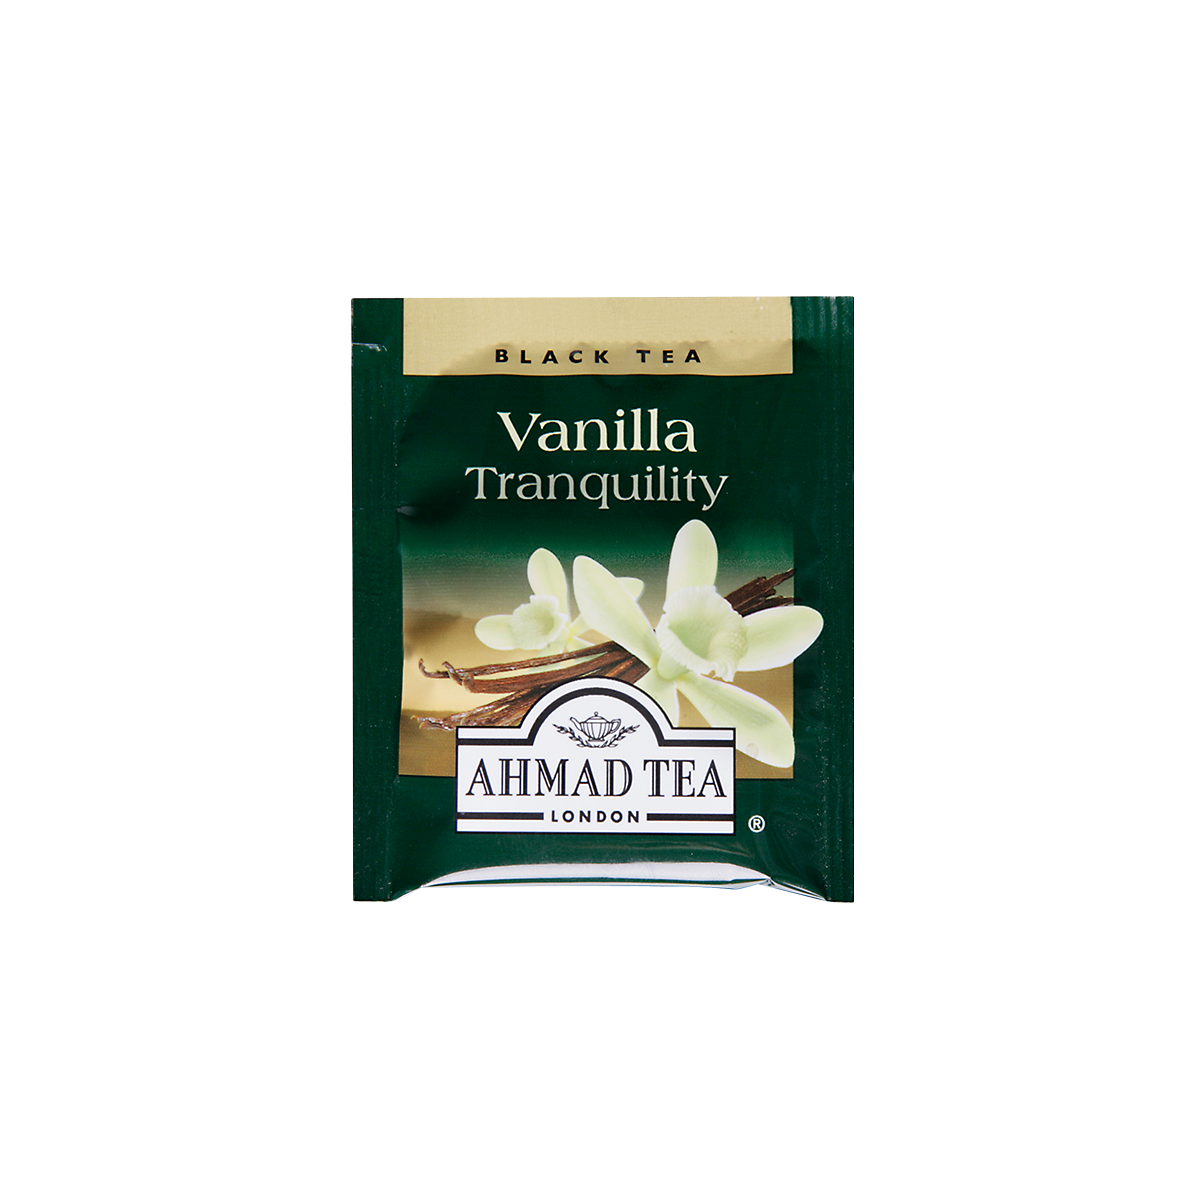 vanilla tranquility flavored black tea with vanilla pods sips by ahmad tea london tea bags